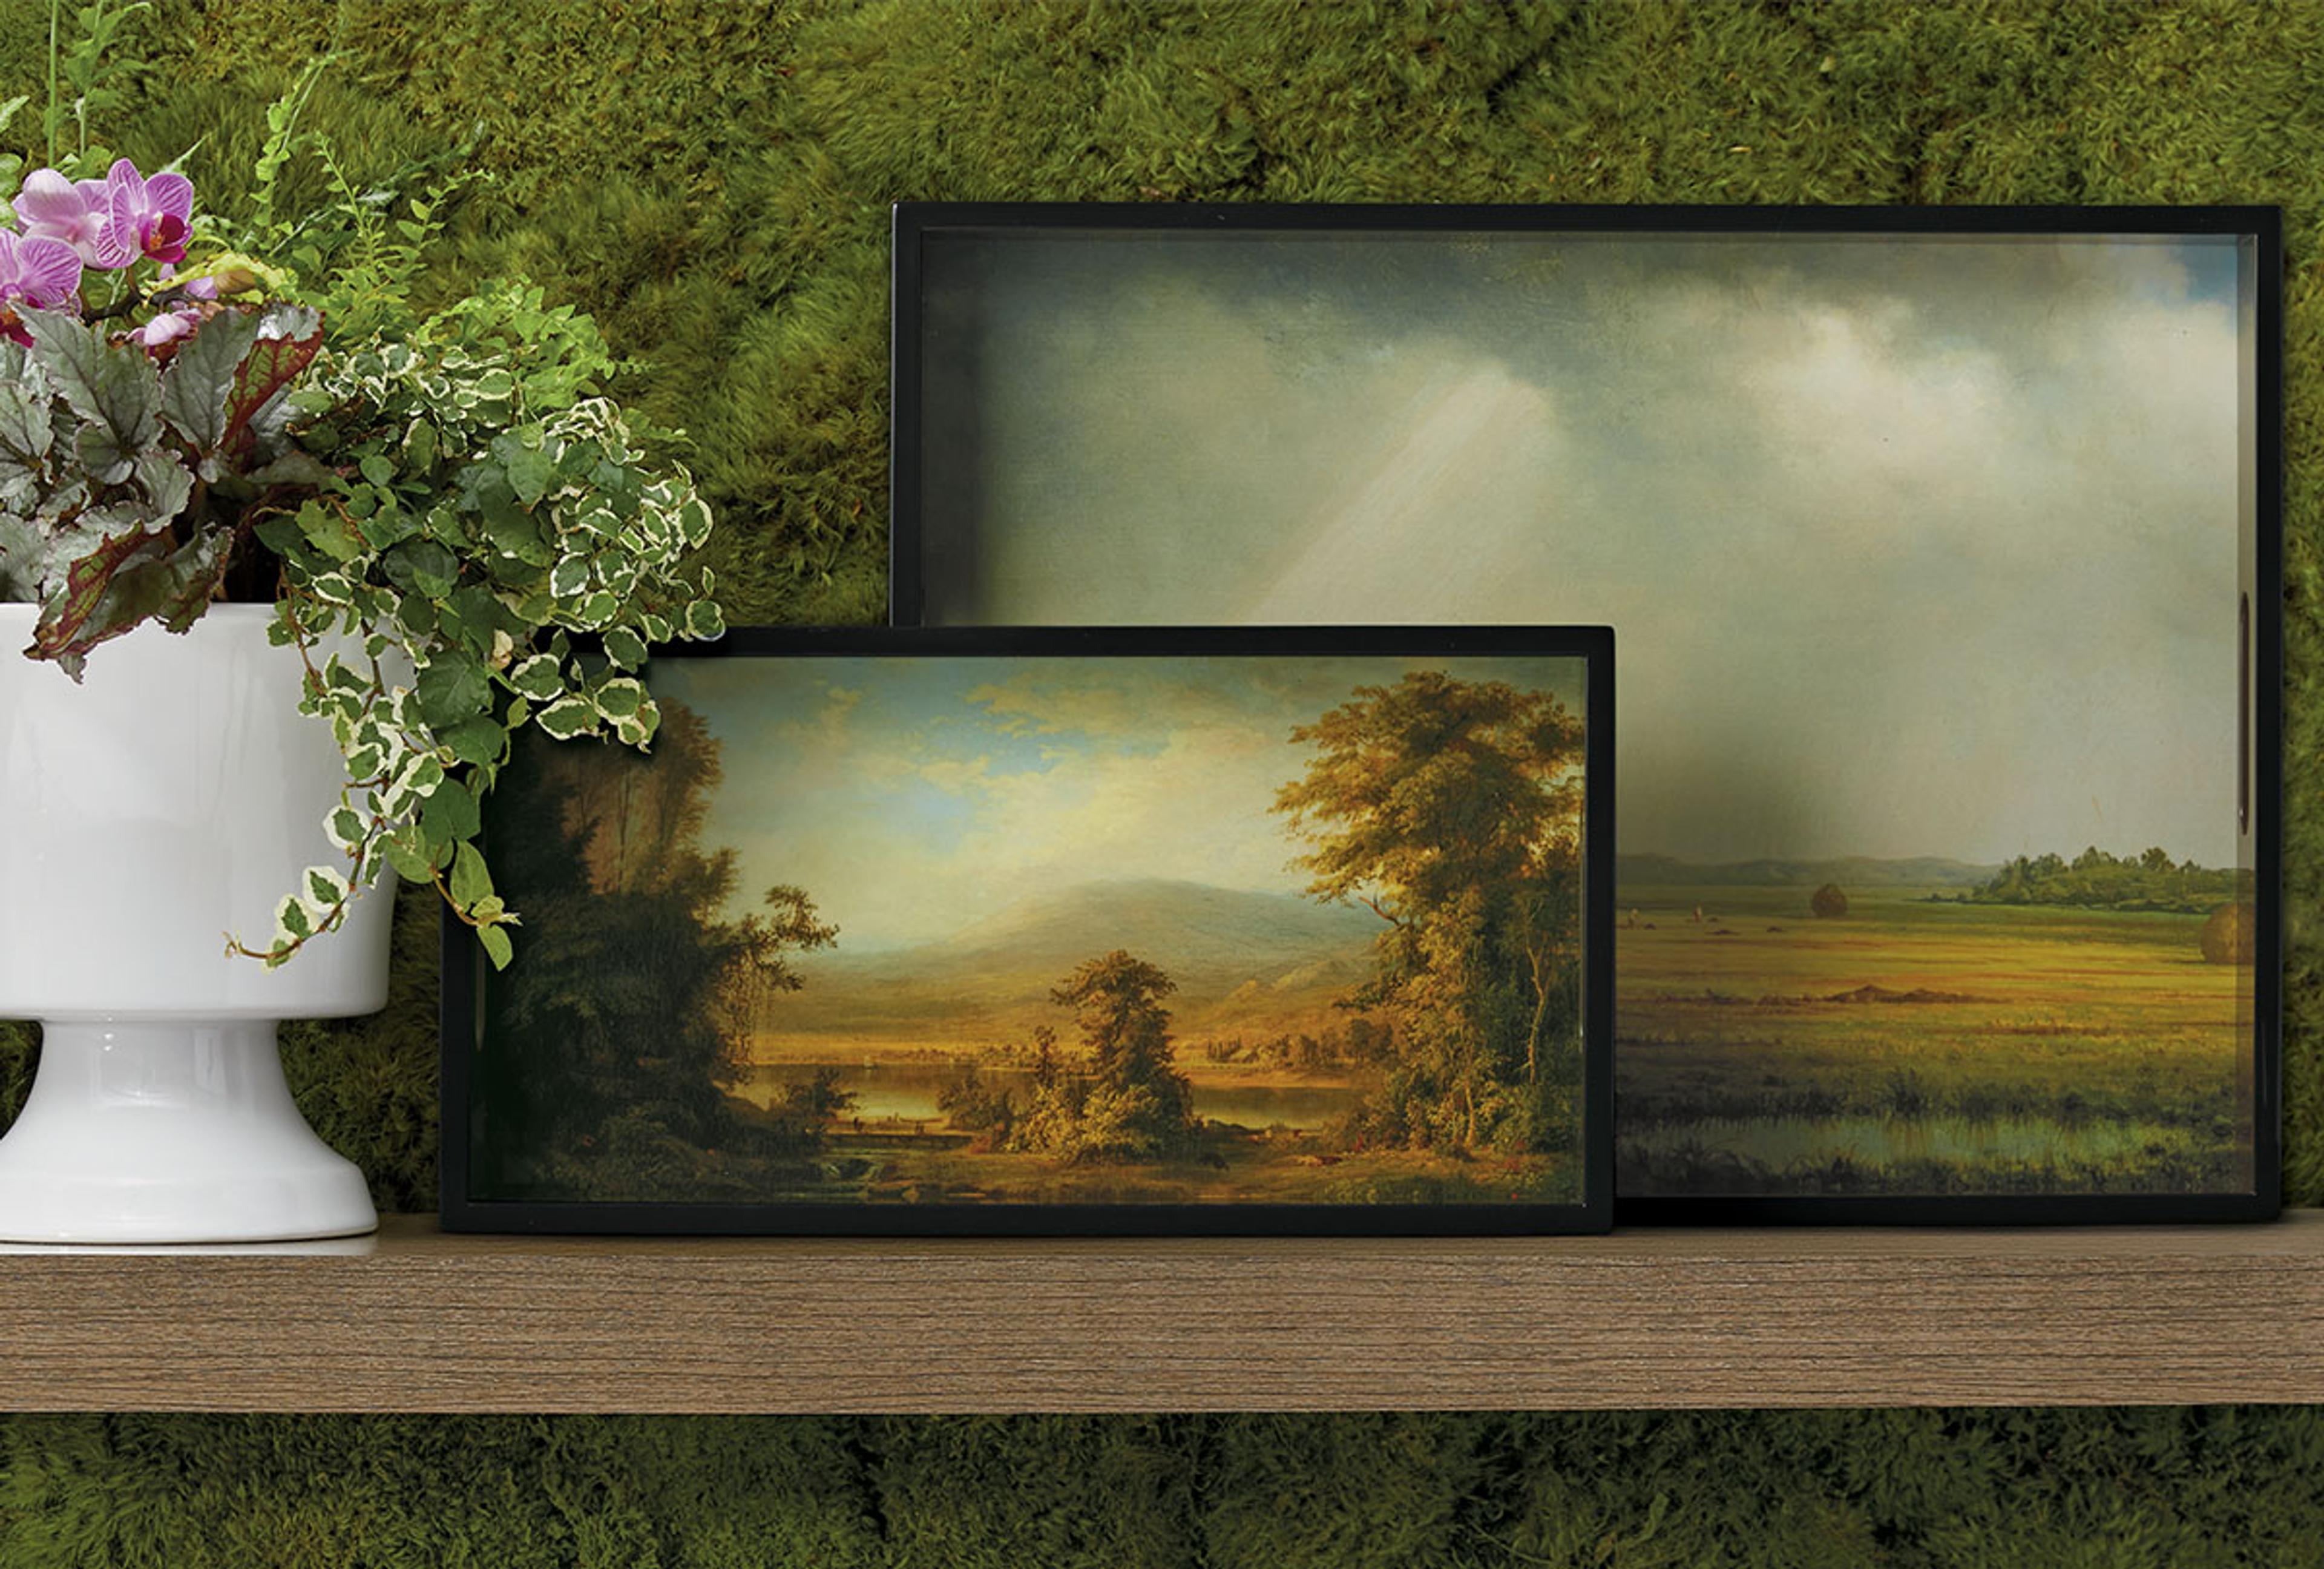 Two framed landscapes sit on a wooden shelf next to a floral arrangement.